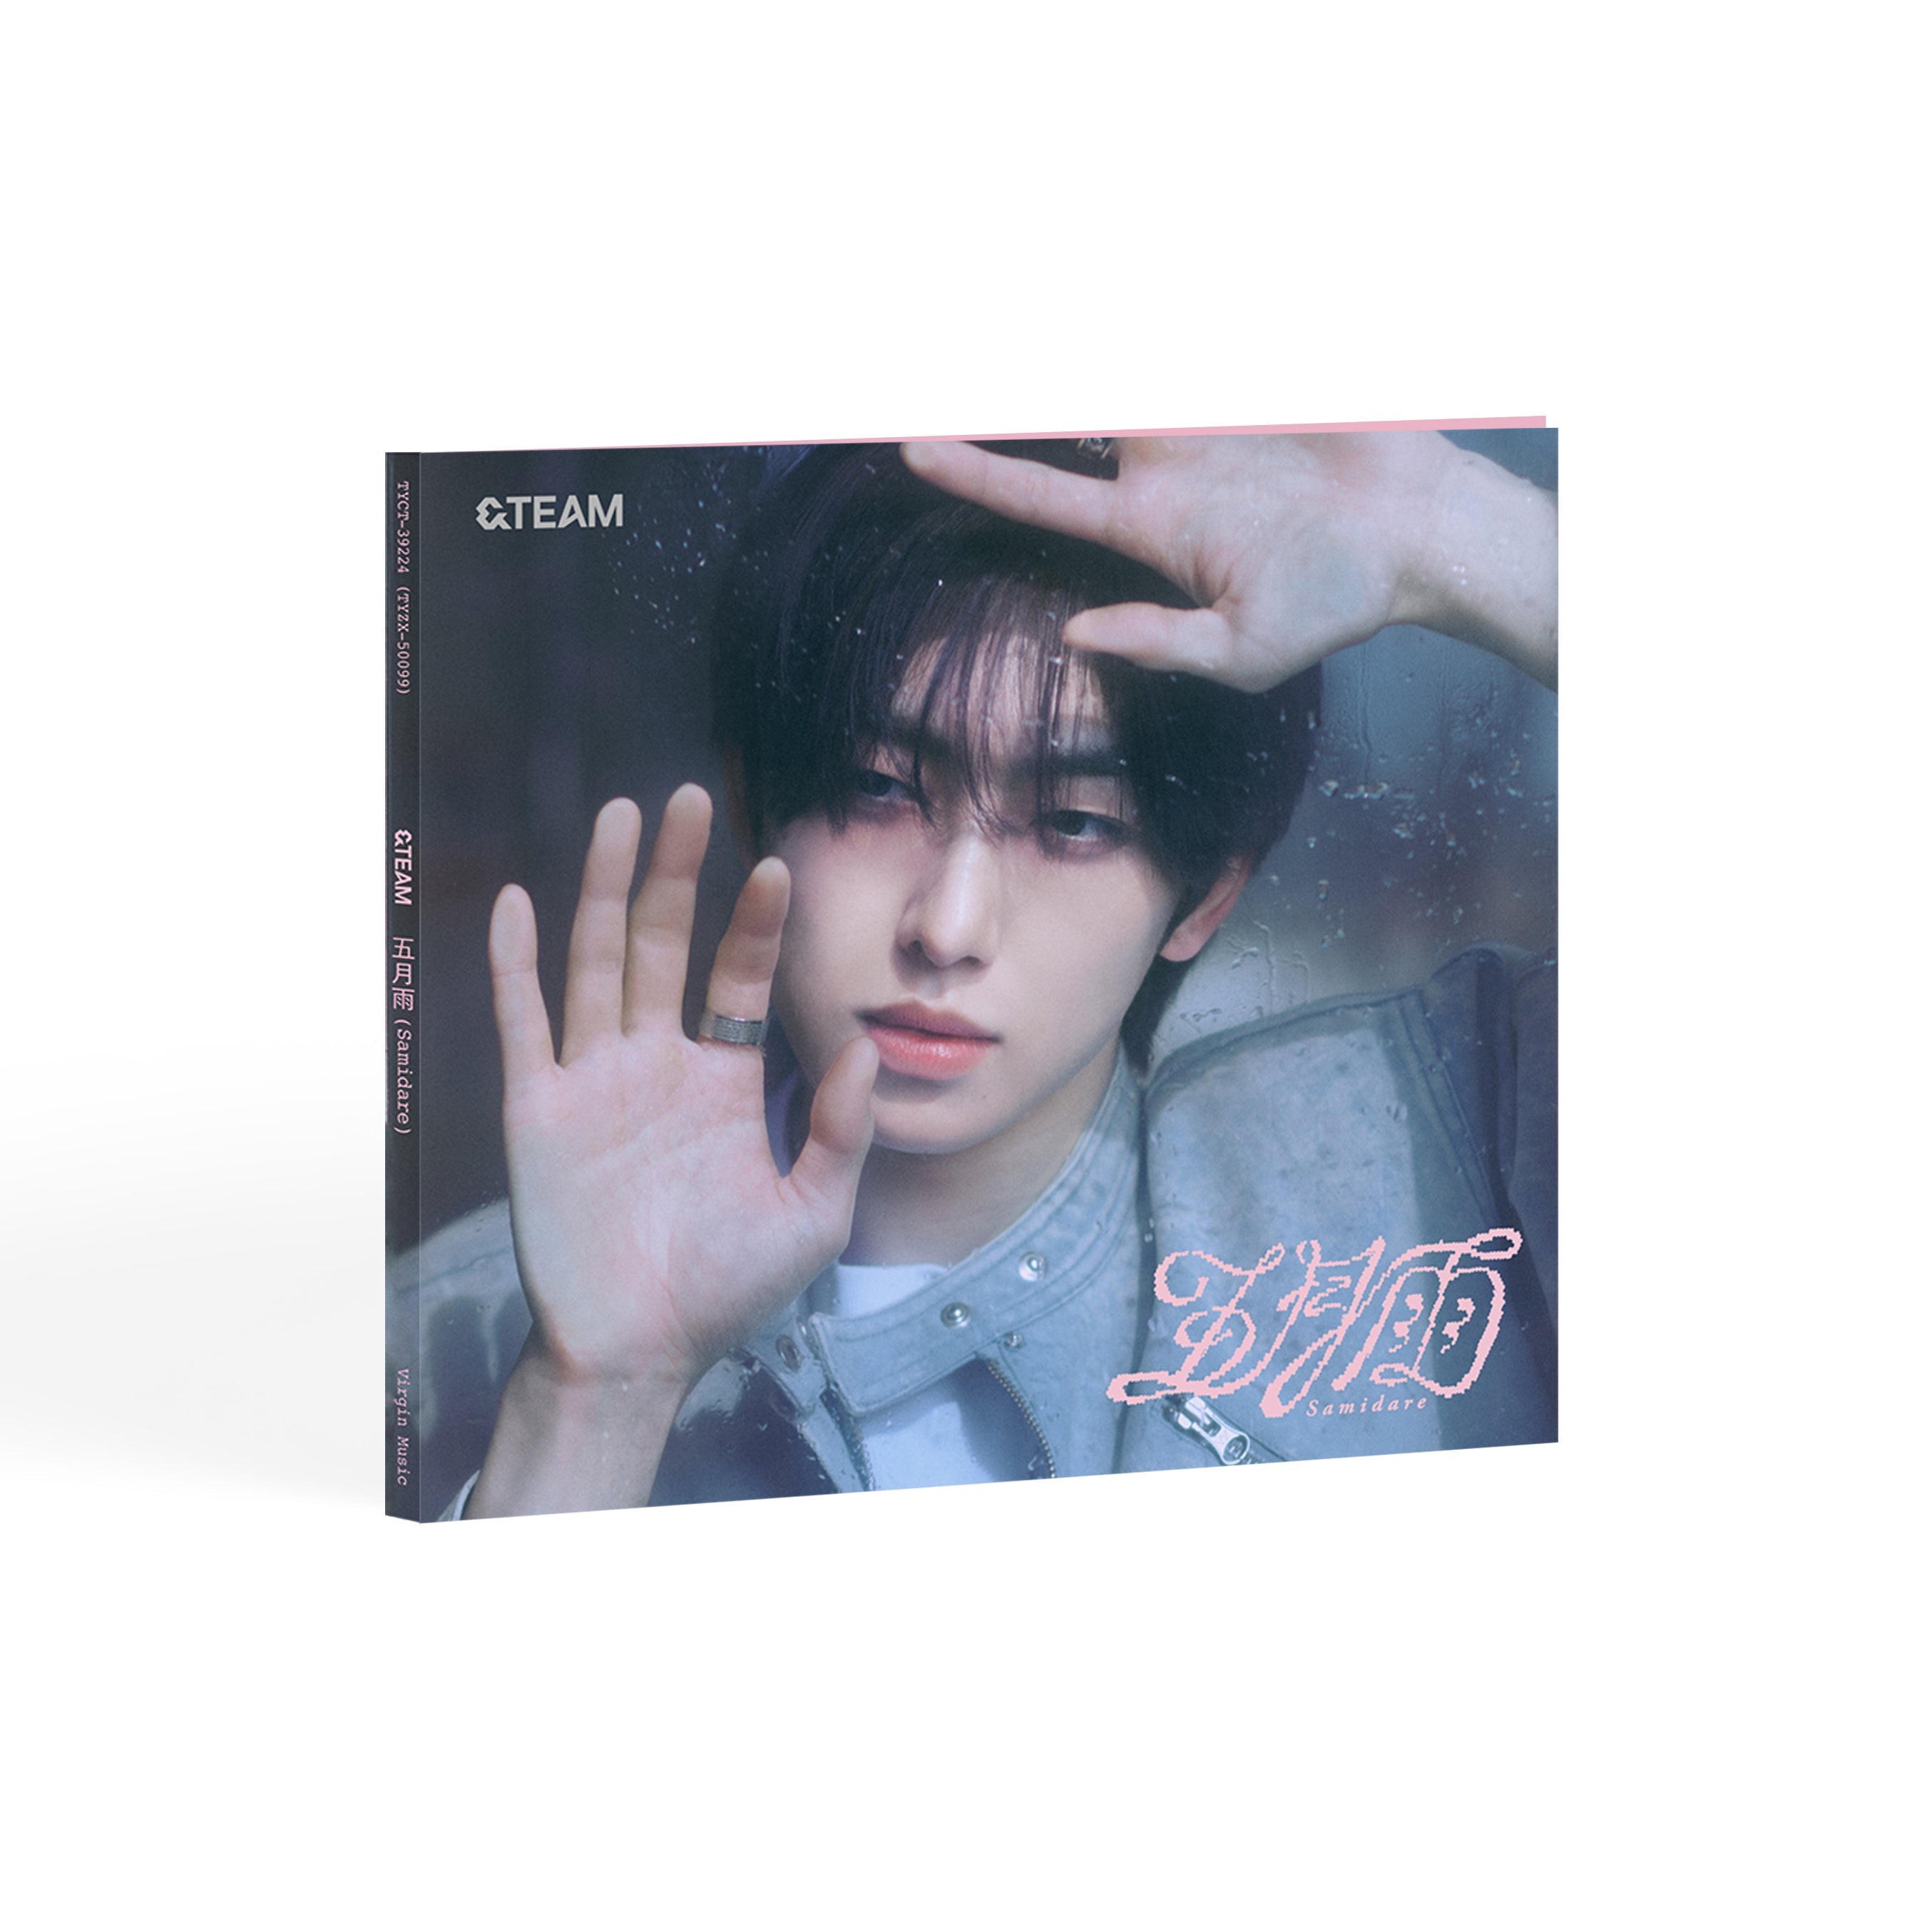 &TEAM - 1ST SINGLE [Samidare] SINGLE SOLO EDITION Kpop Album - Kpop Wholesale | Seoufly